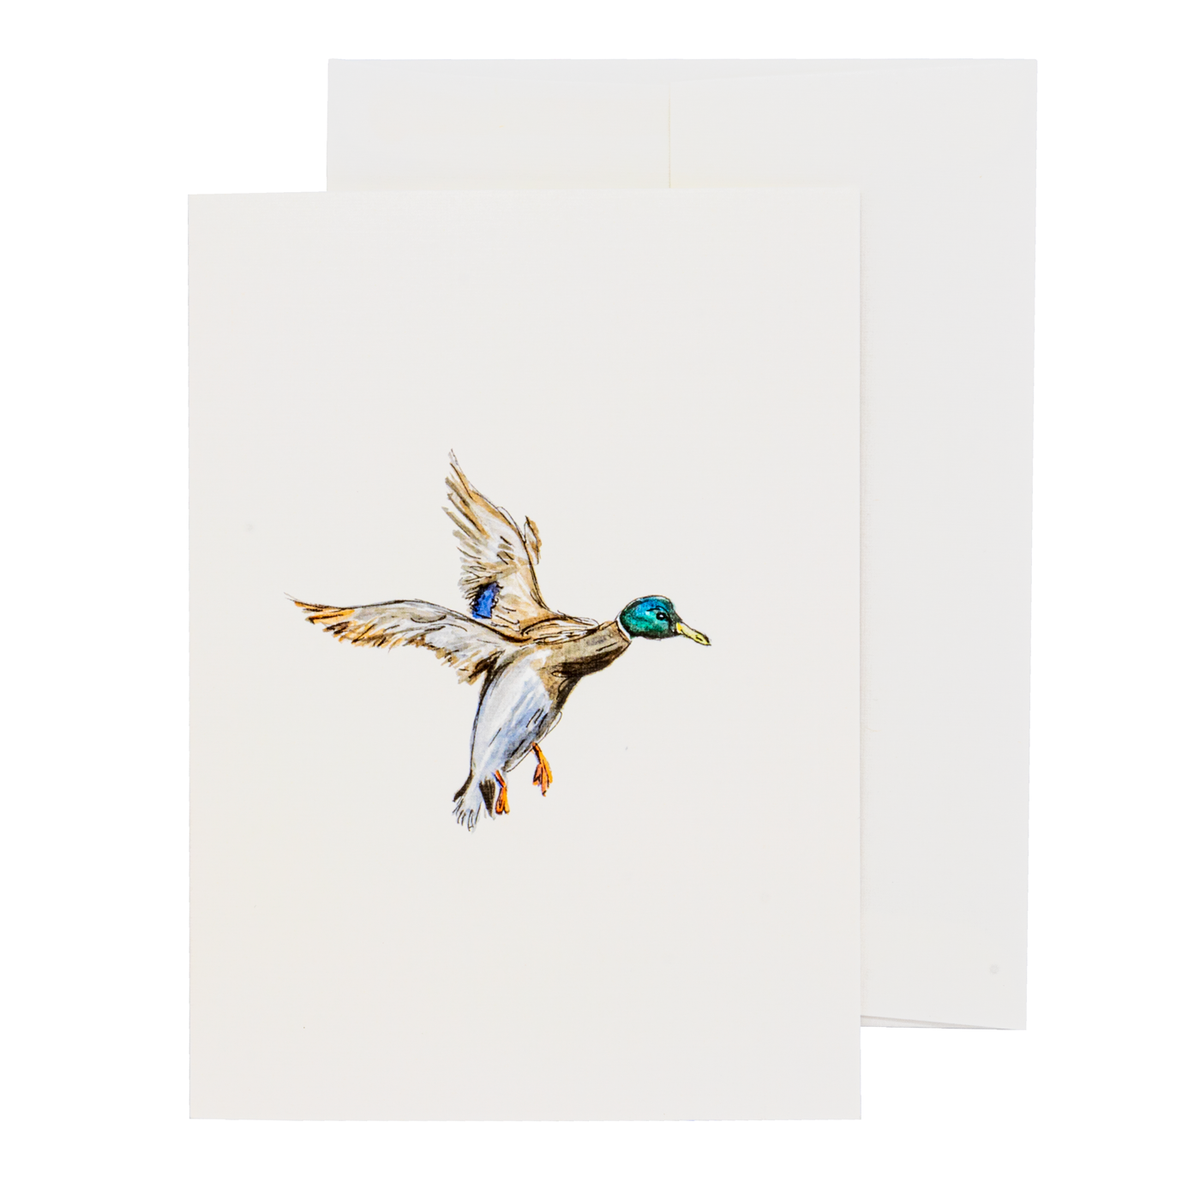 Taylor Paladino Note Card Box Set A2 - Mallard Duck In FLight